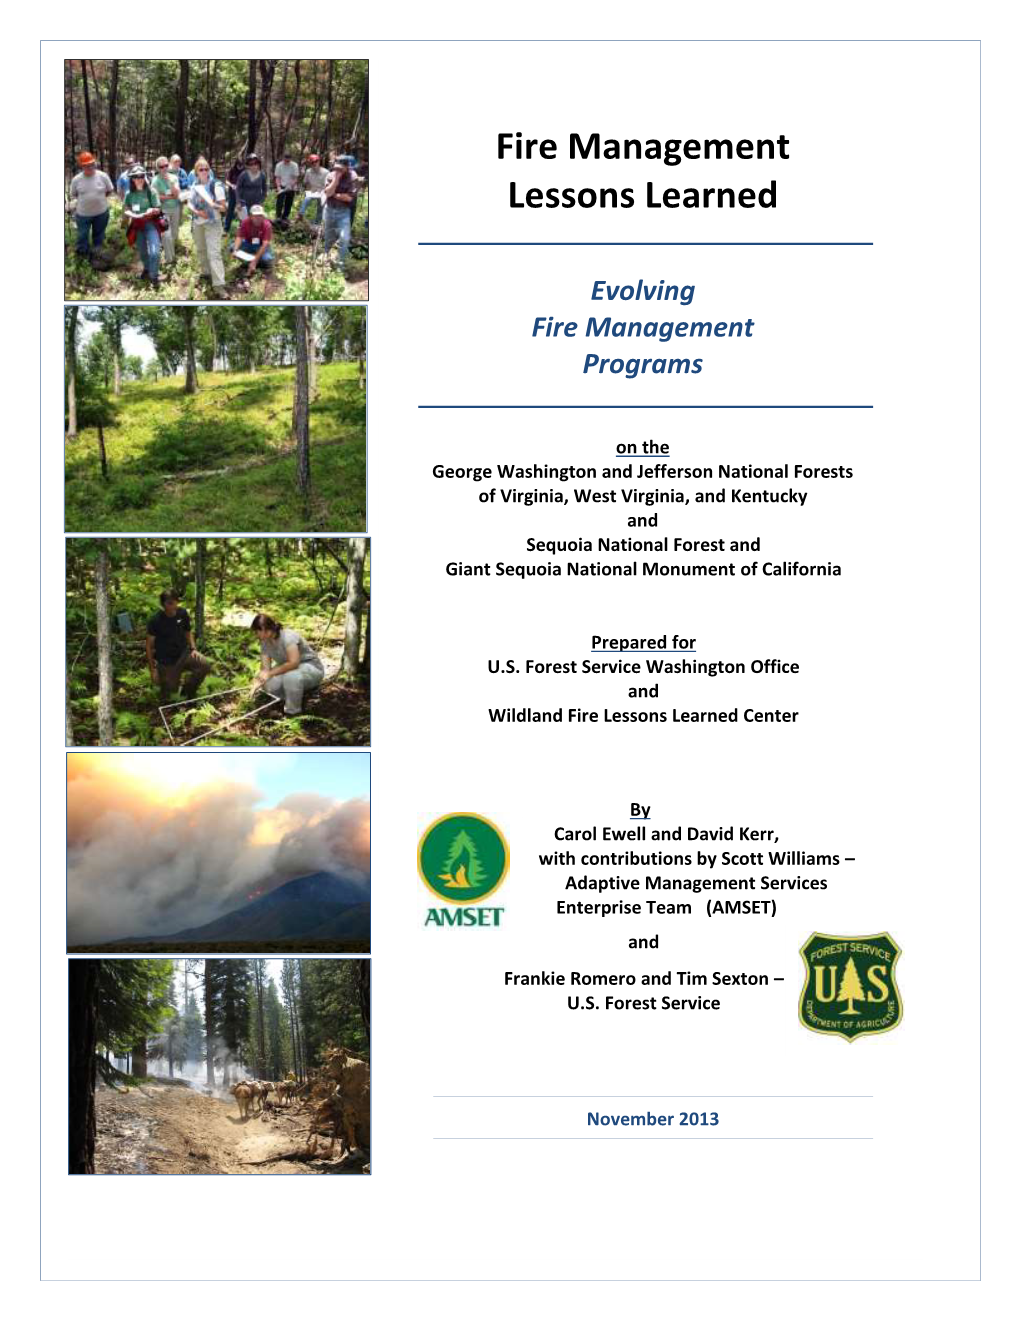 Fire Management Lessons Learned – Evolving Fire Management Programs 1